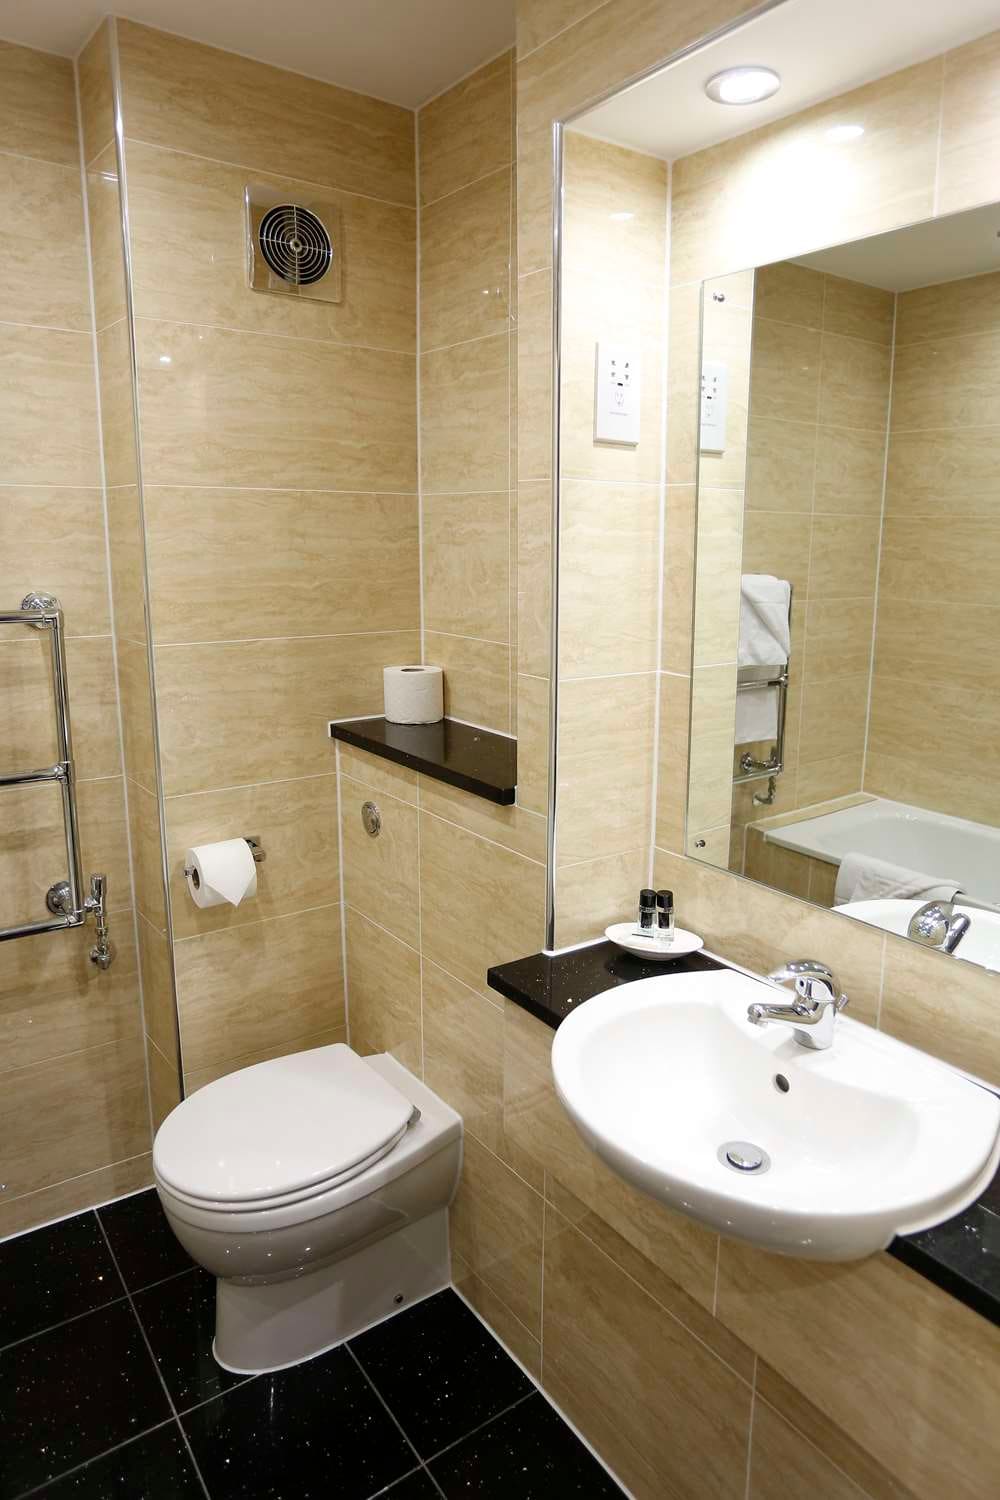 Corner Shower, Adhesive Bath Shelf with Hooks, Steel Storage Organizer for  Bathroom, Toilet, Kitchen and Dorm, for 90 Degrees - China Bedroom, Shelf